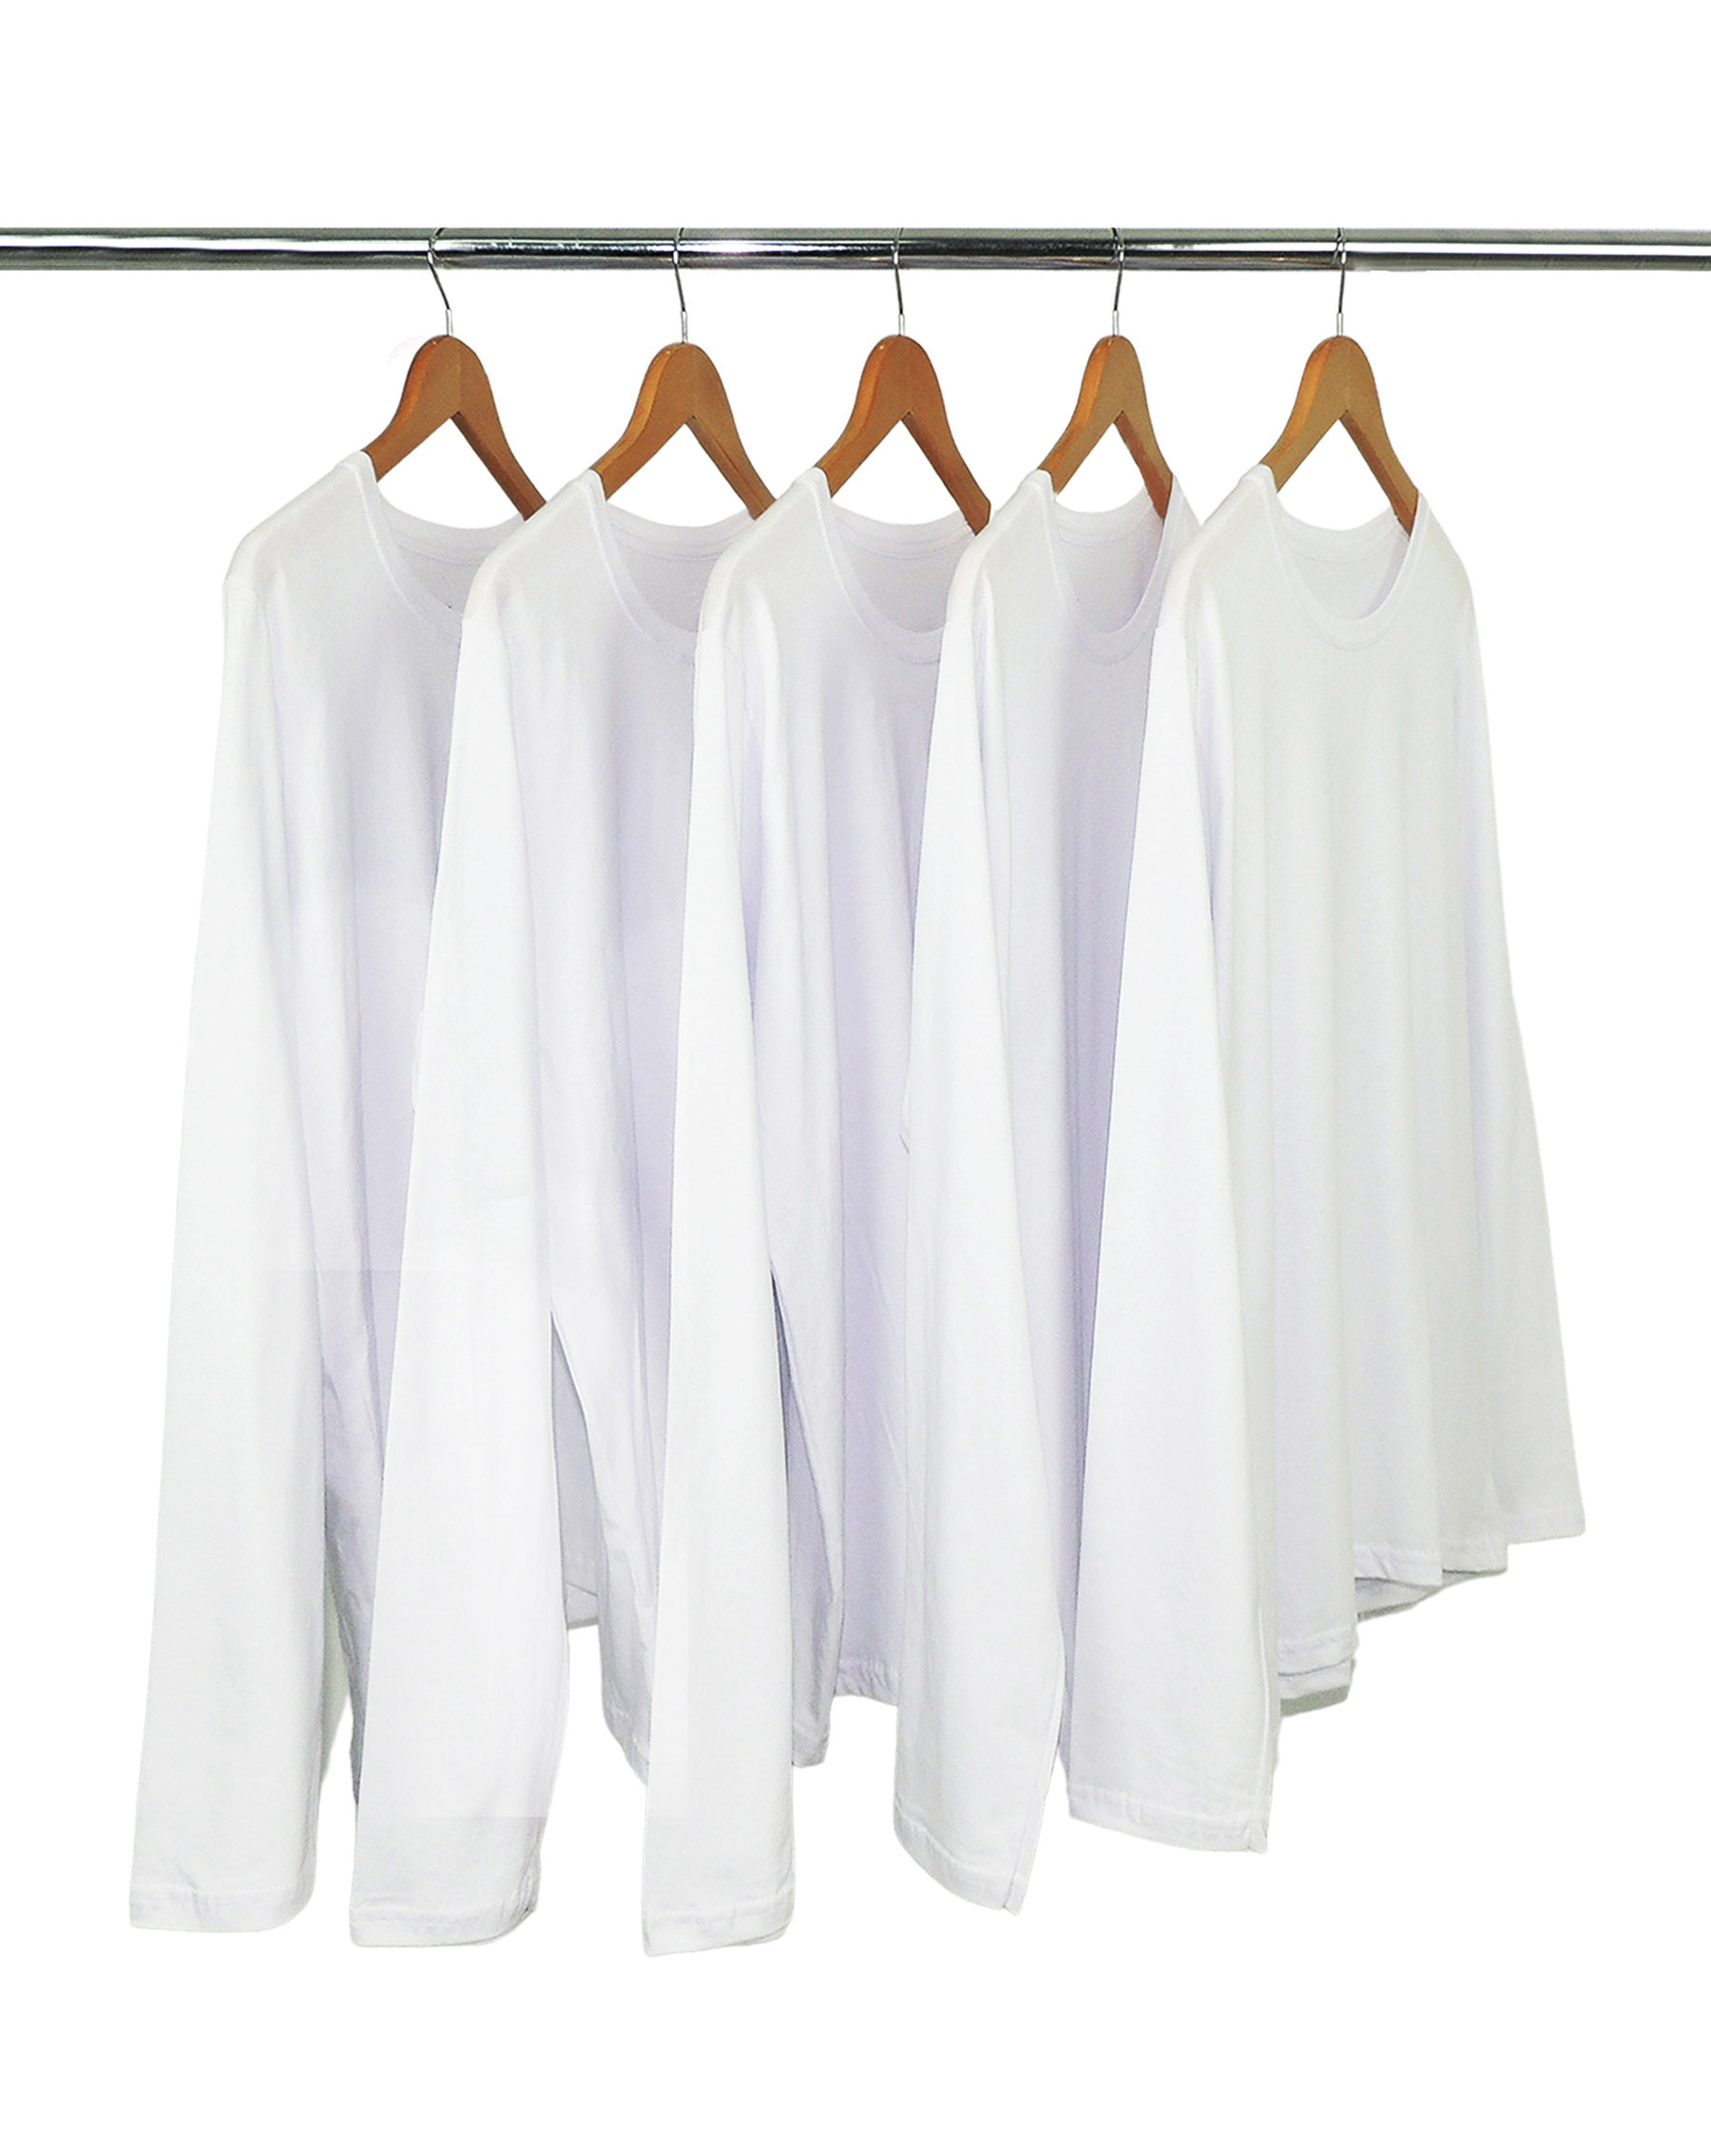 KIT 5 Camisetas Manga Longa de Algodão Premium Branca